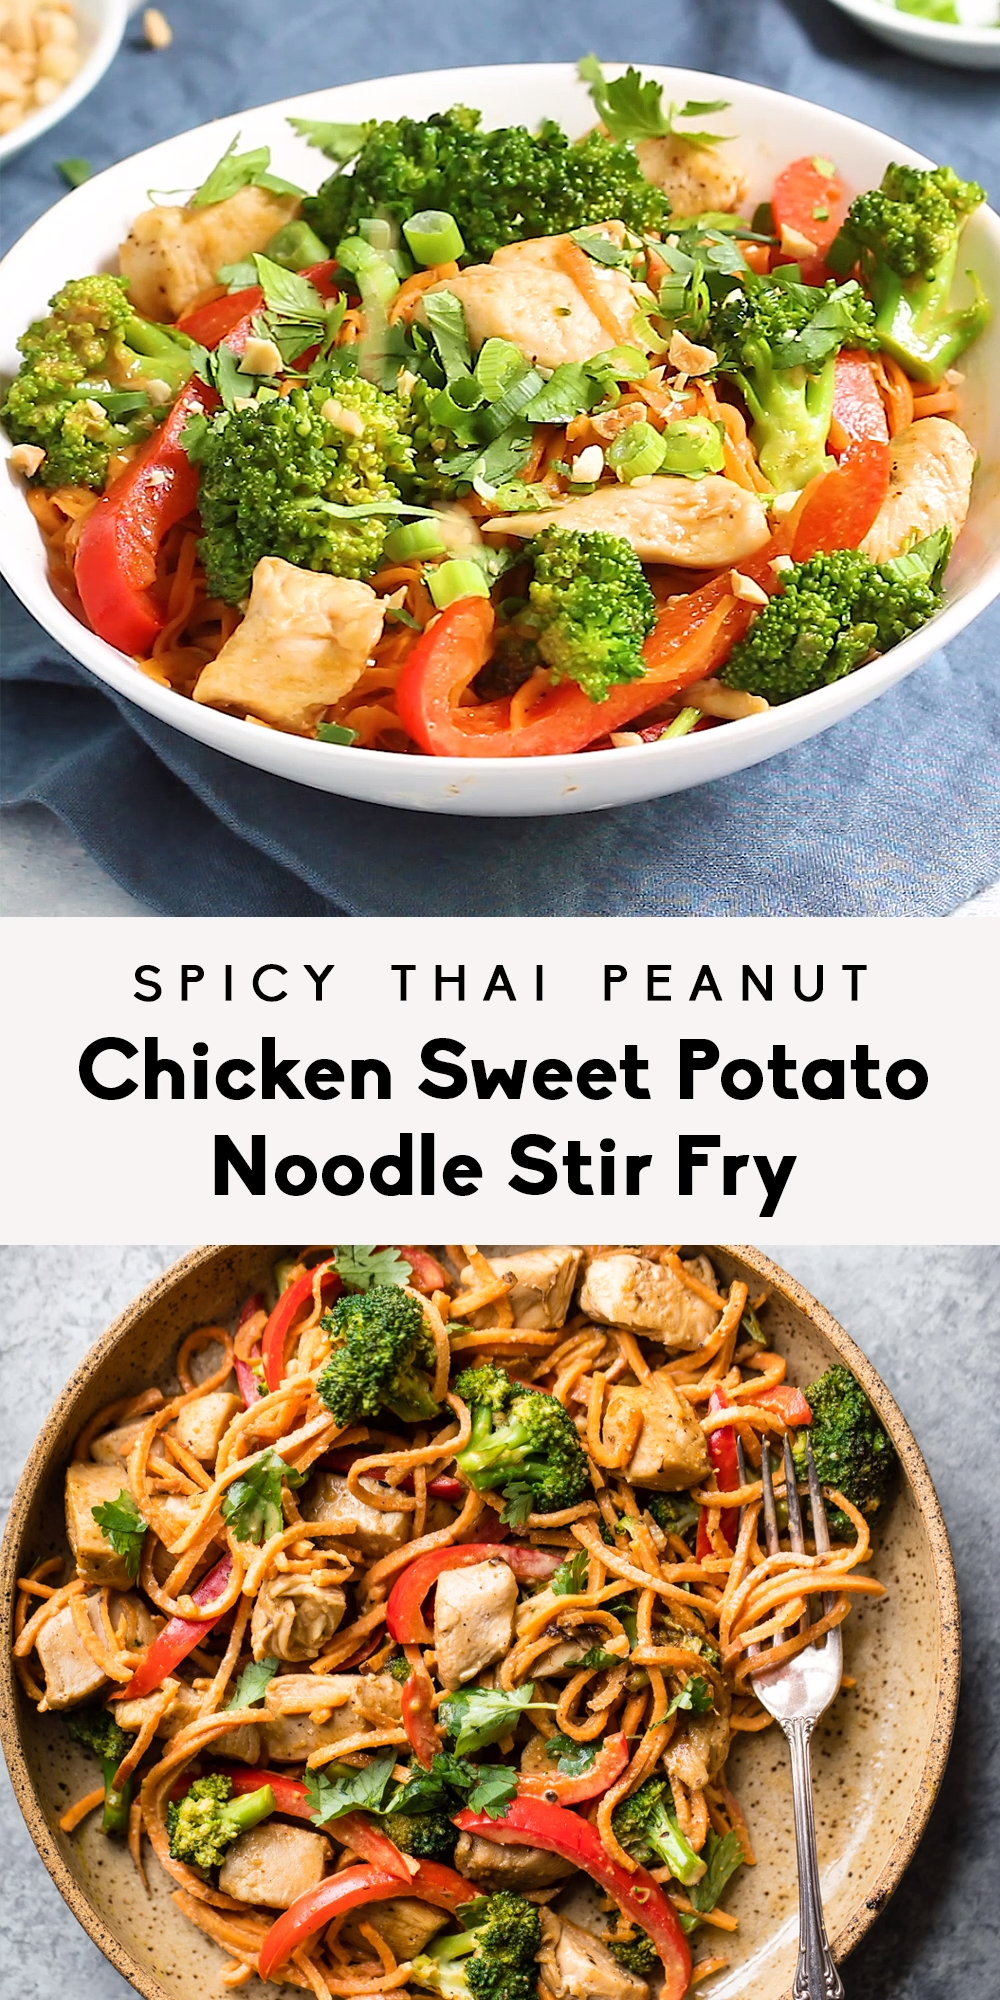 Spicy Thai Peanut Chicken Sweet Potato Noodle Stir Fry -   19 healthy recipes Quick simple ideas